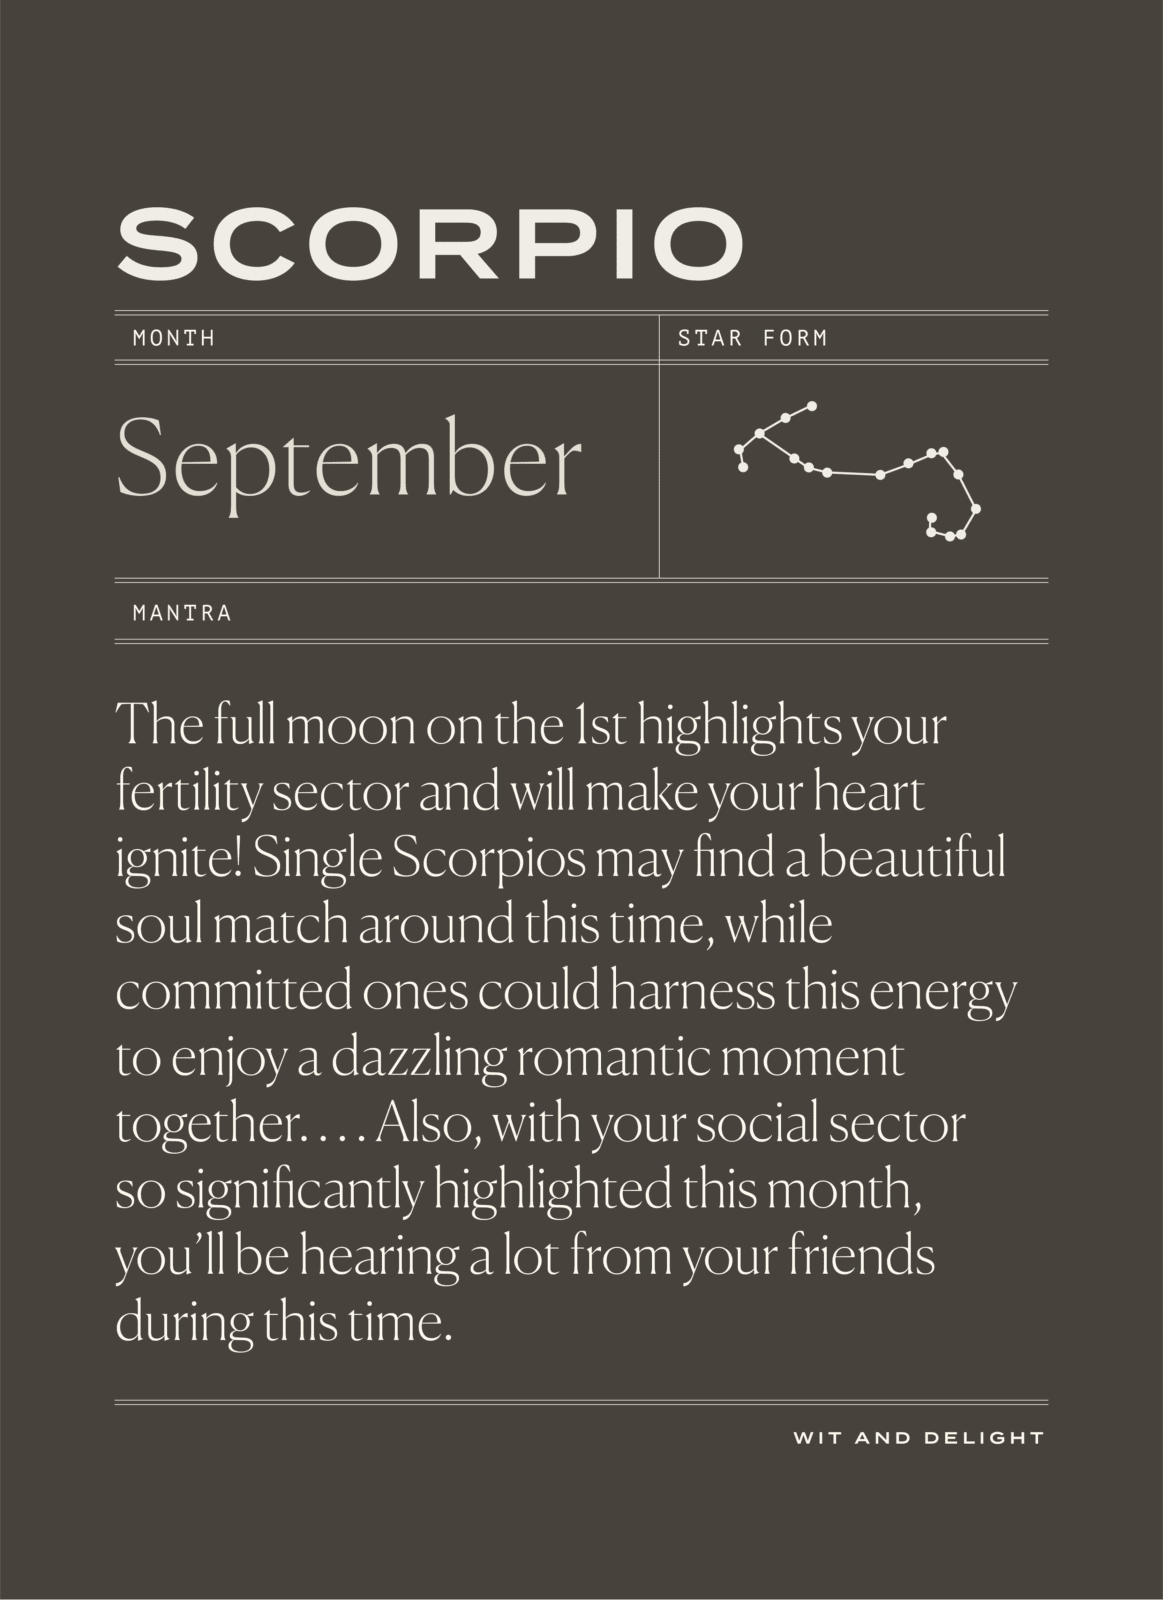 Scorpio September 2020 Horoscope | Wit & Delight